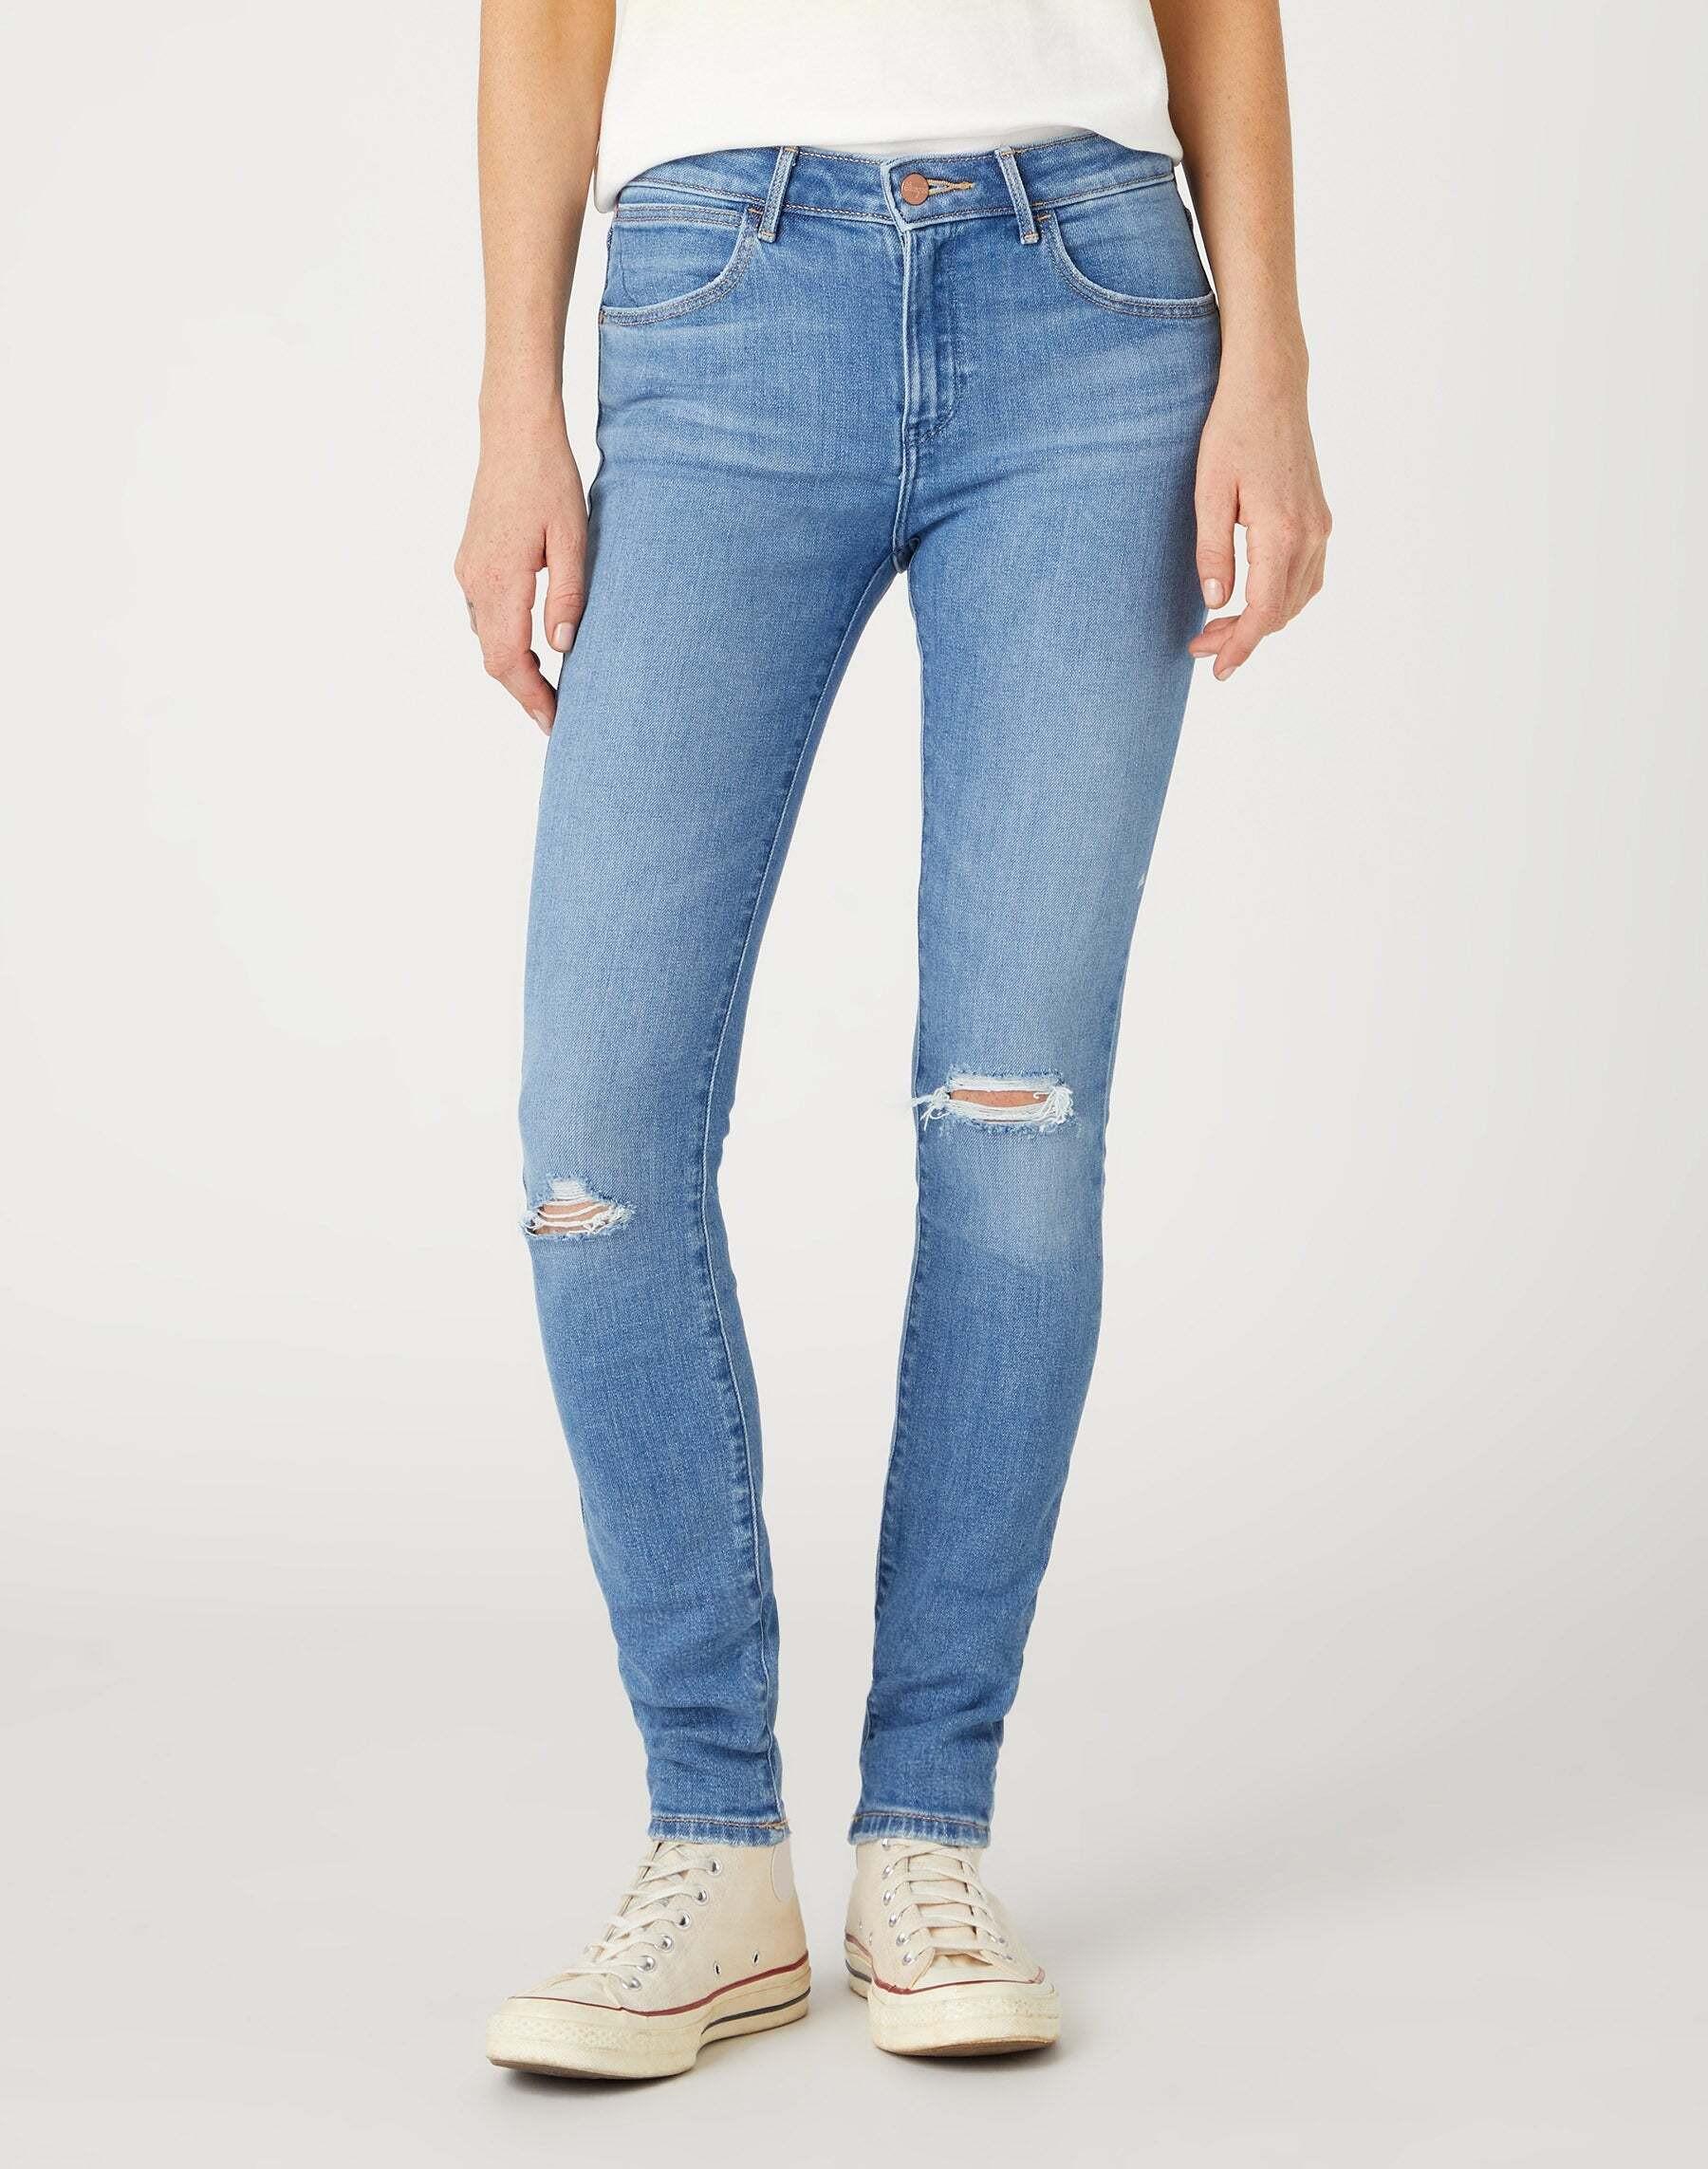 Jeans Skinny Damen Blau L30/W29 von Wrangler